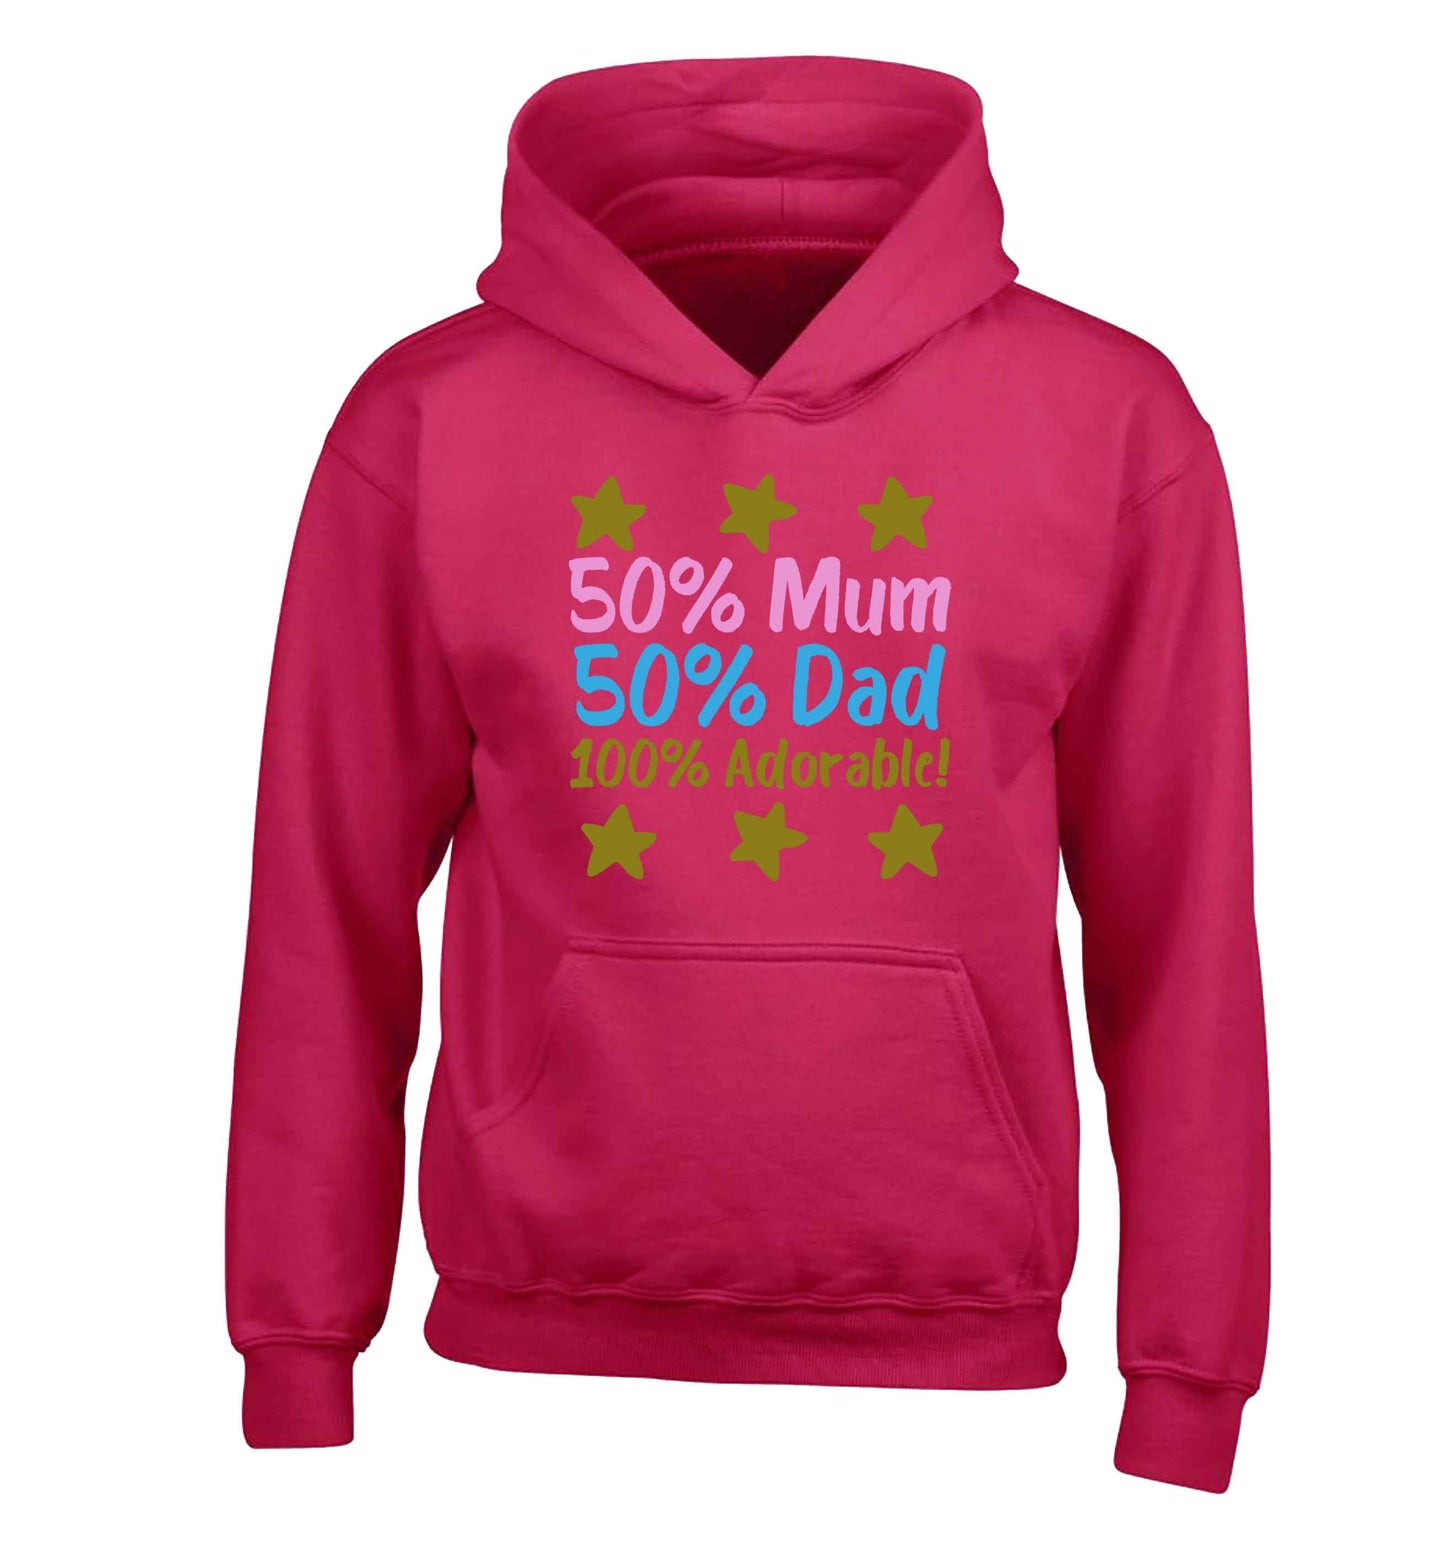 50% mum 50% dad 100% adorable children's pink hoodie 12-13 Years